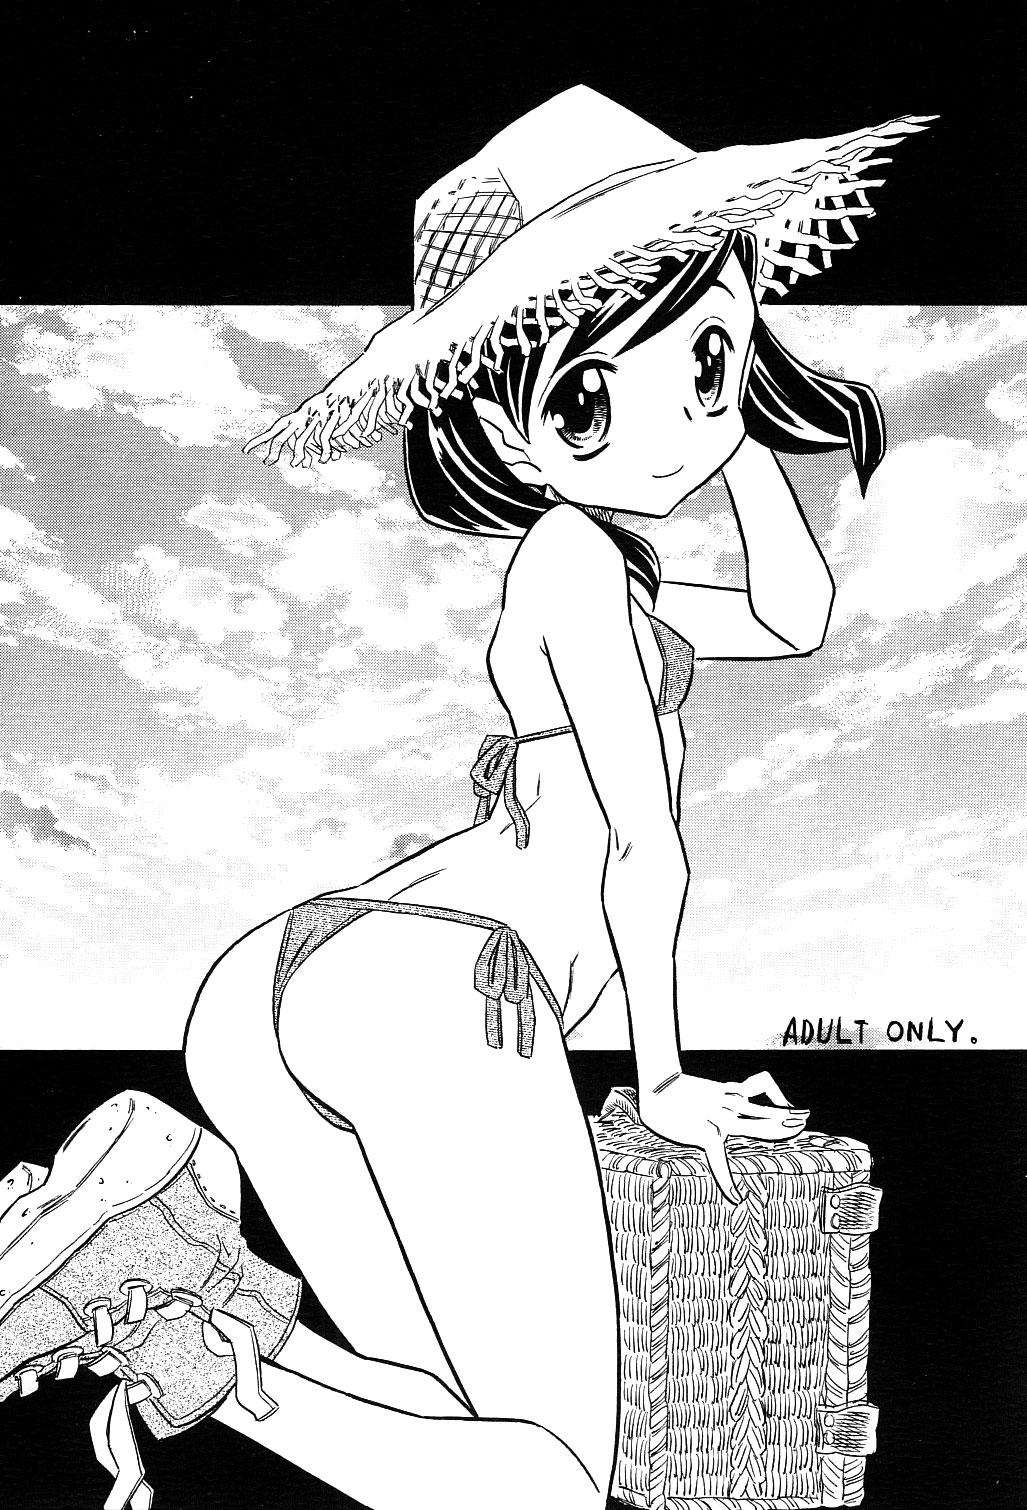 Female Ero Manga Artist Scorned 13